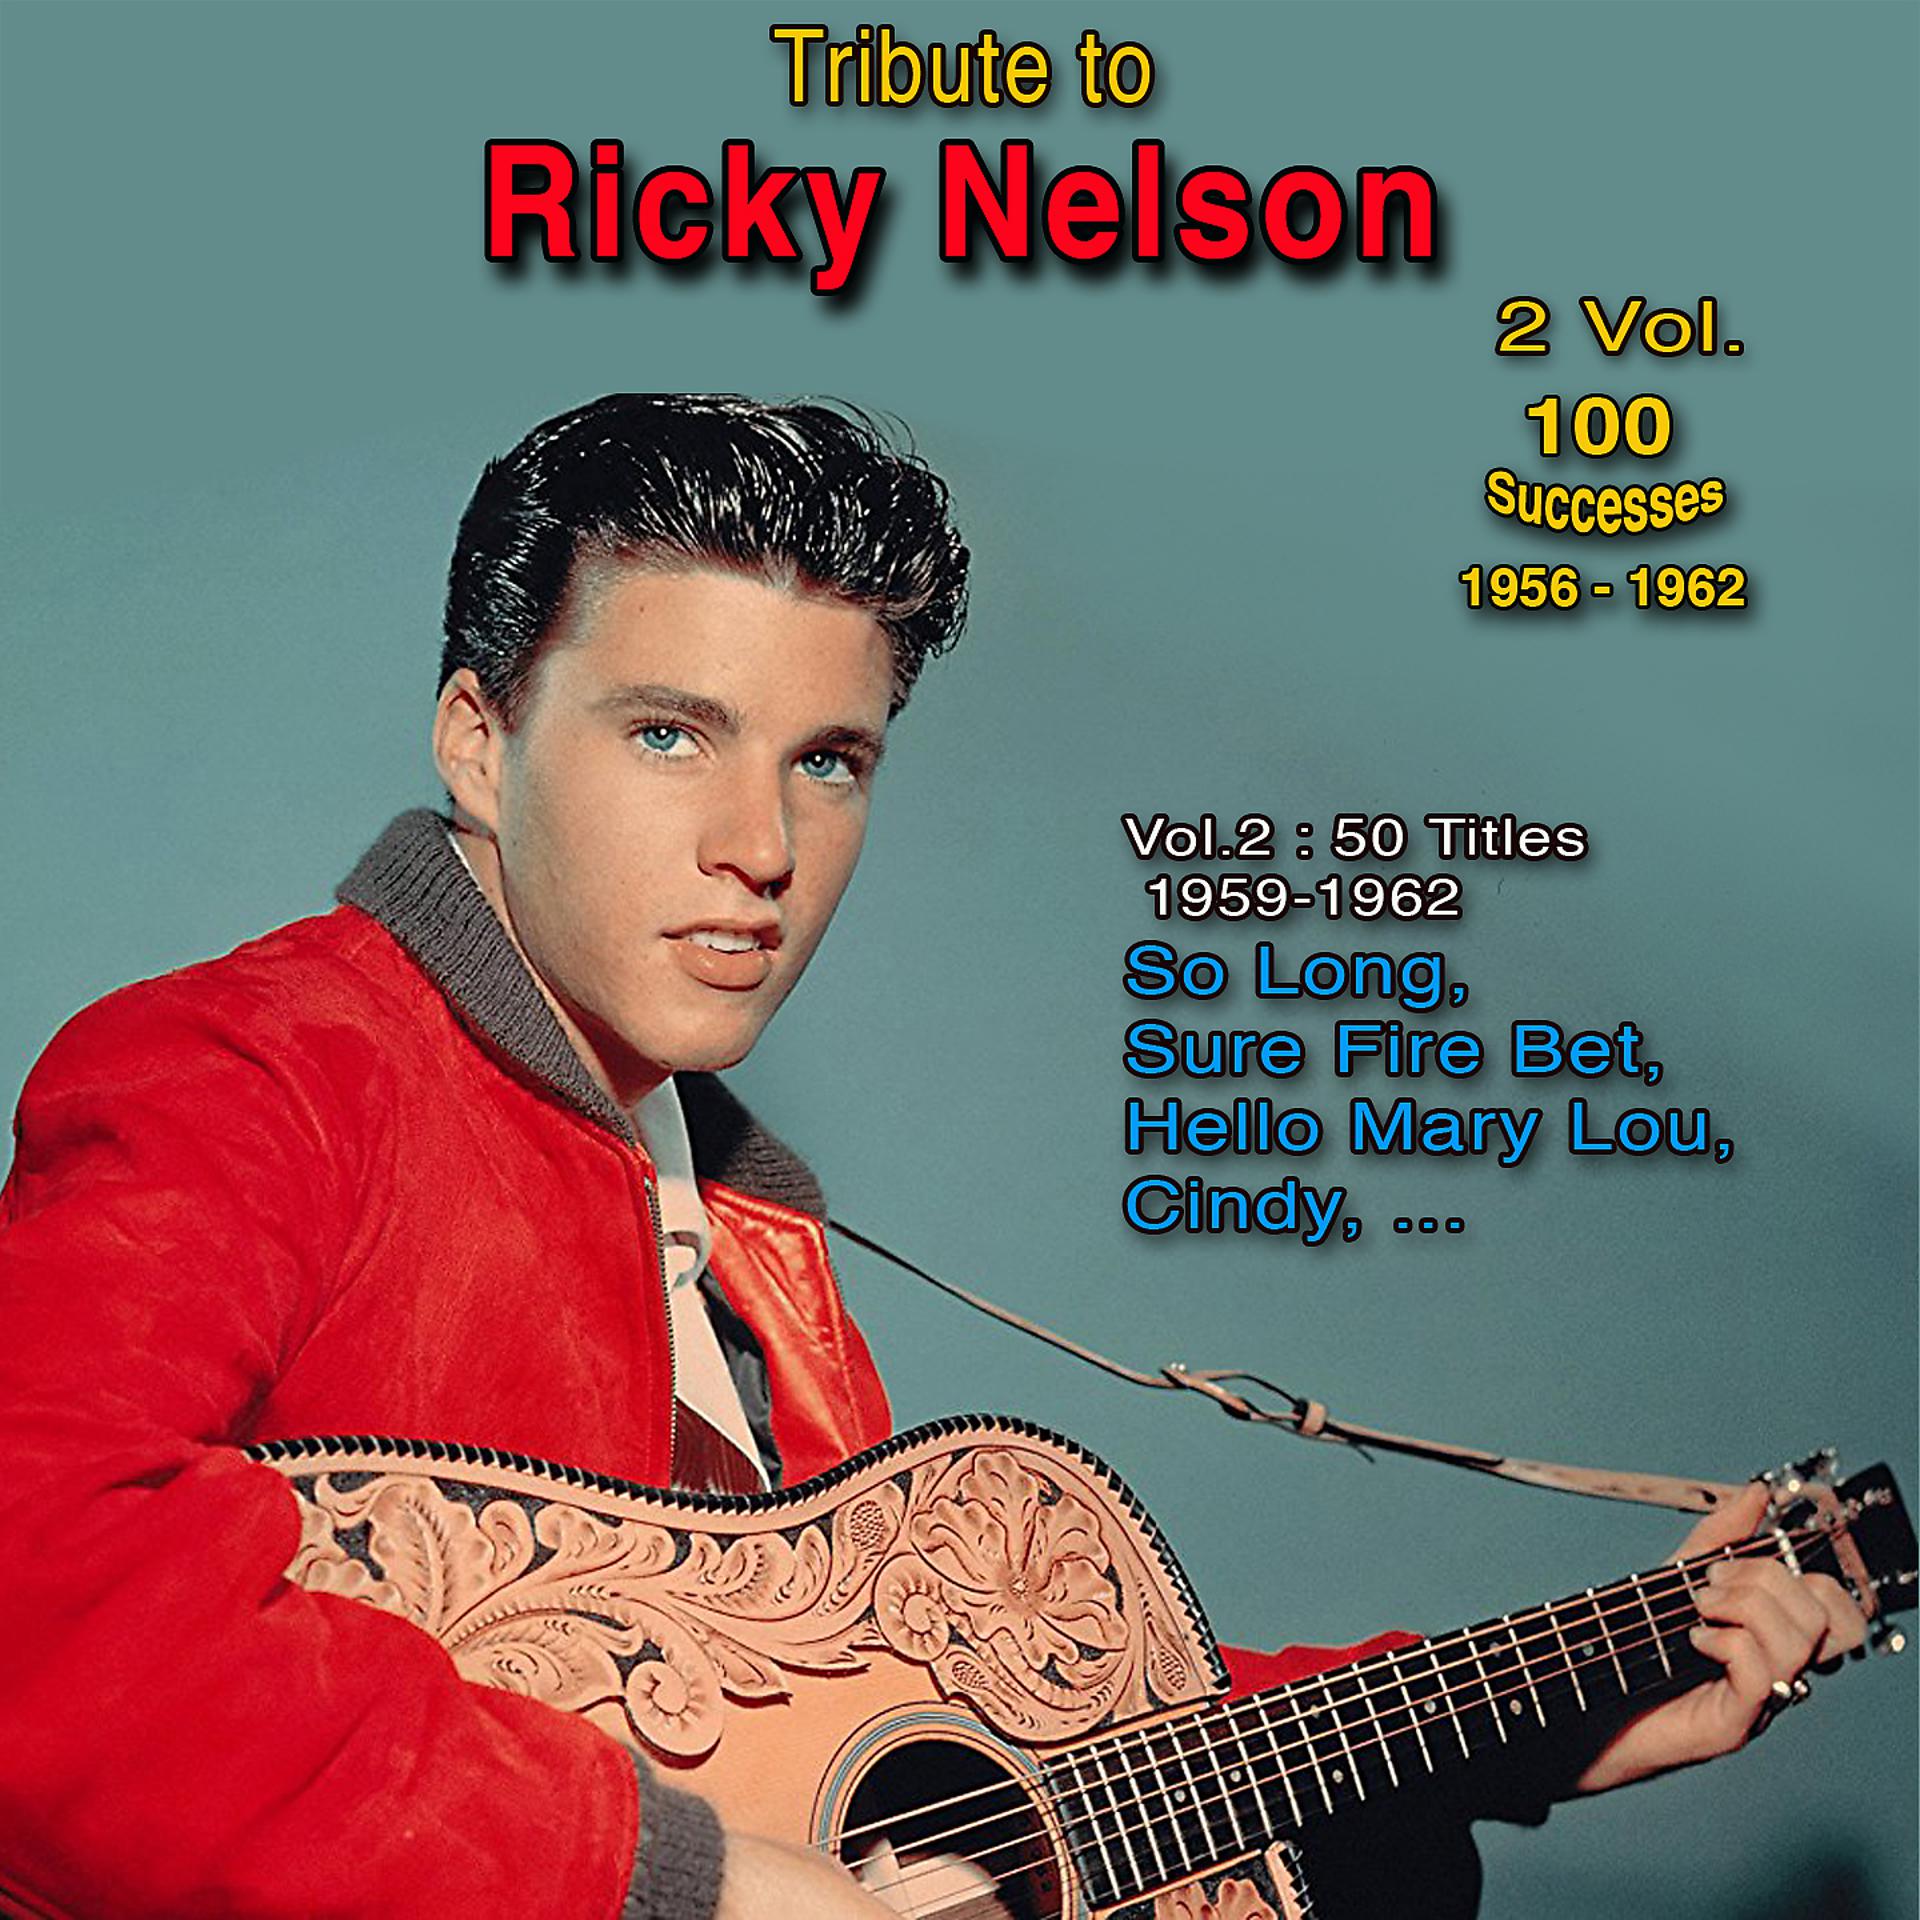 Постер альбома Ricky Nelson "Teen Idol": Integral 1956-1962 - 100 Successes in 2 Vol.